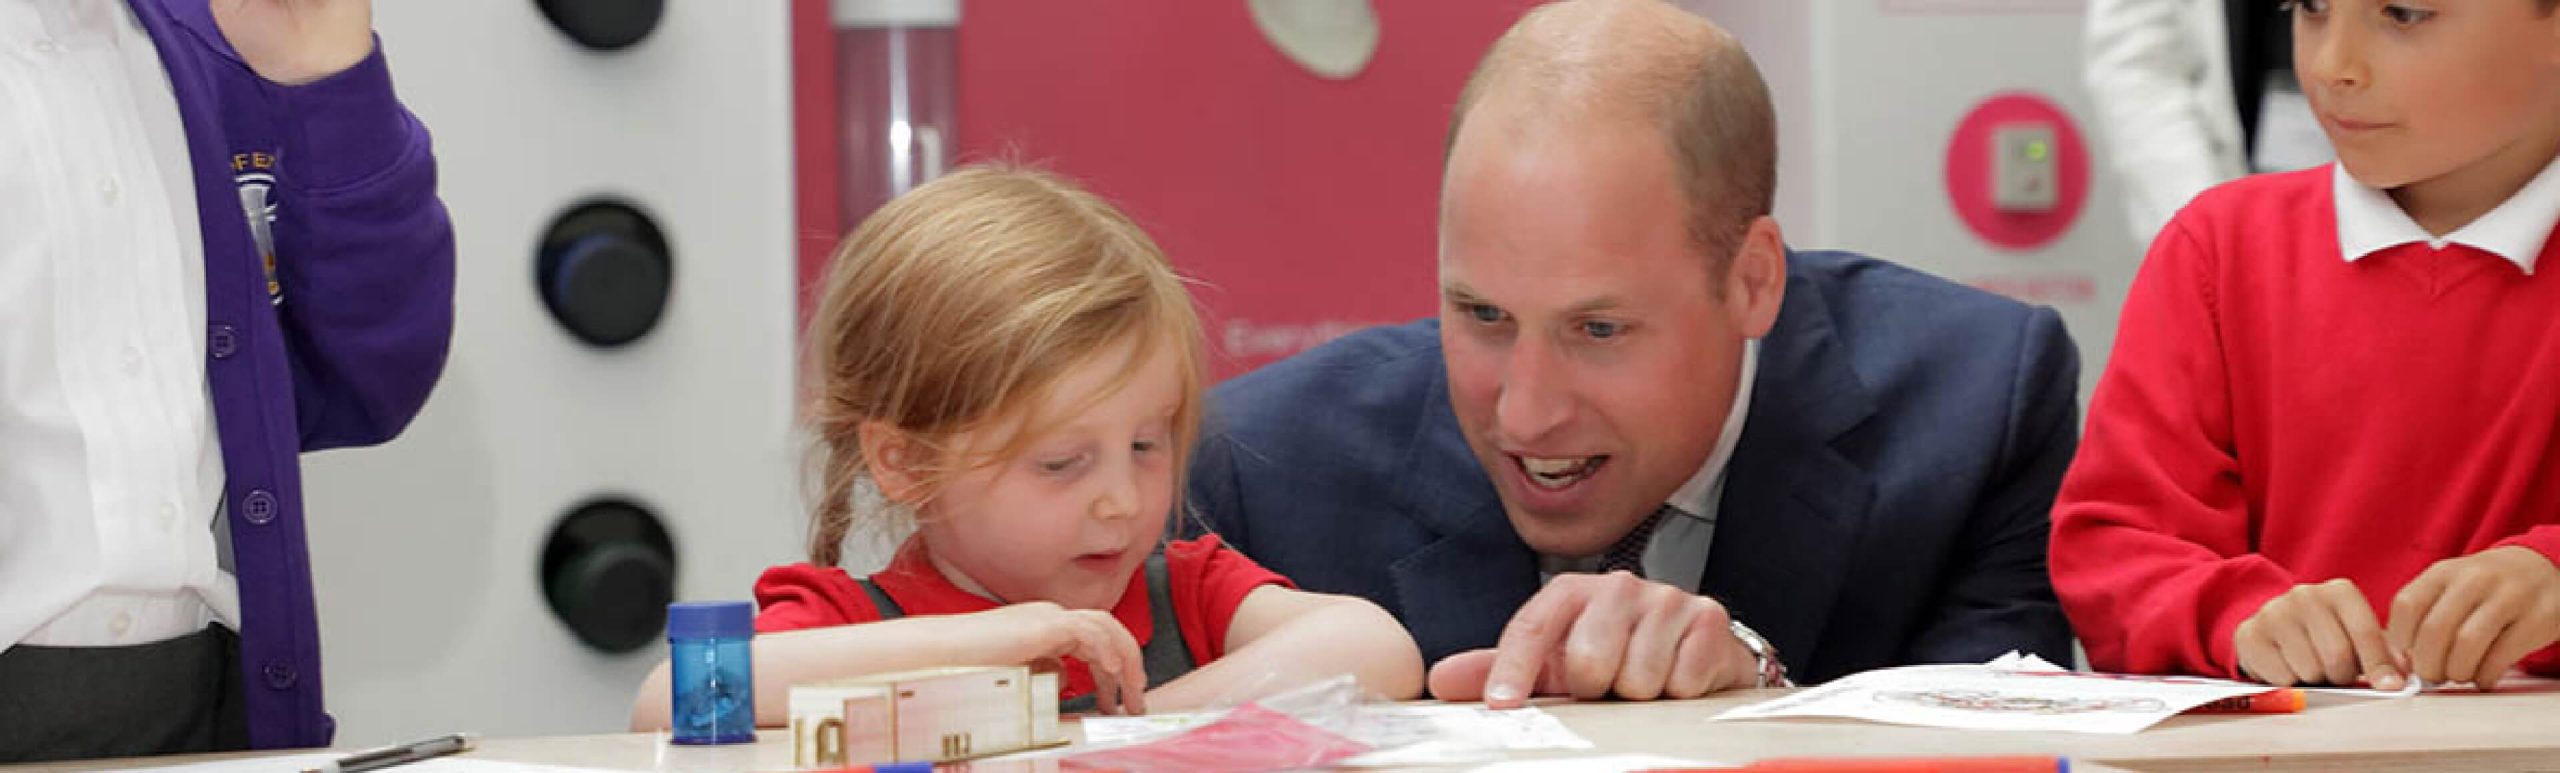 Prince William talks to child